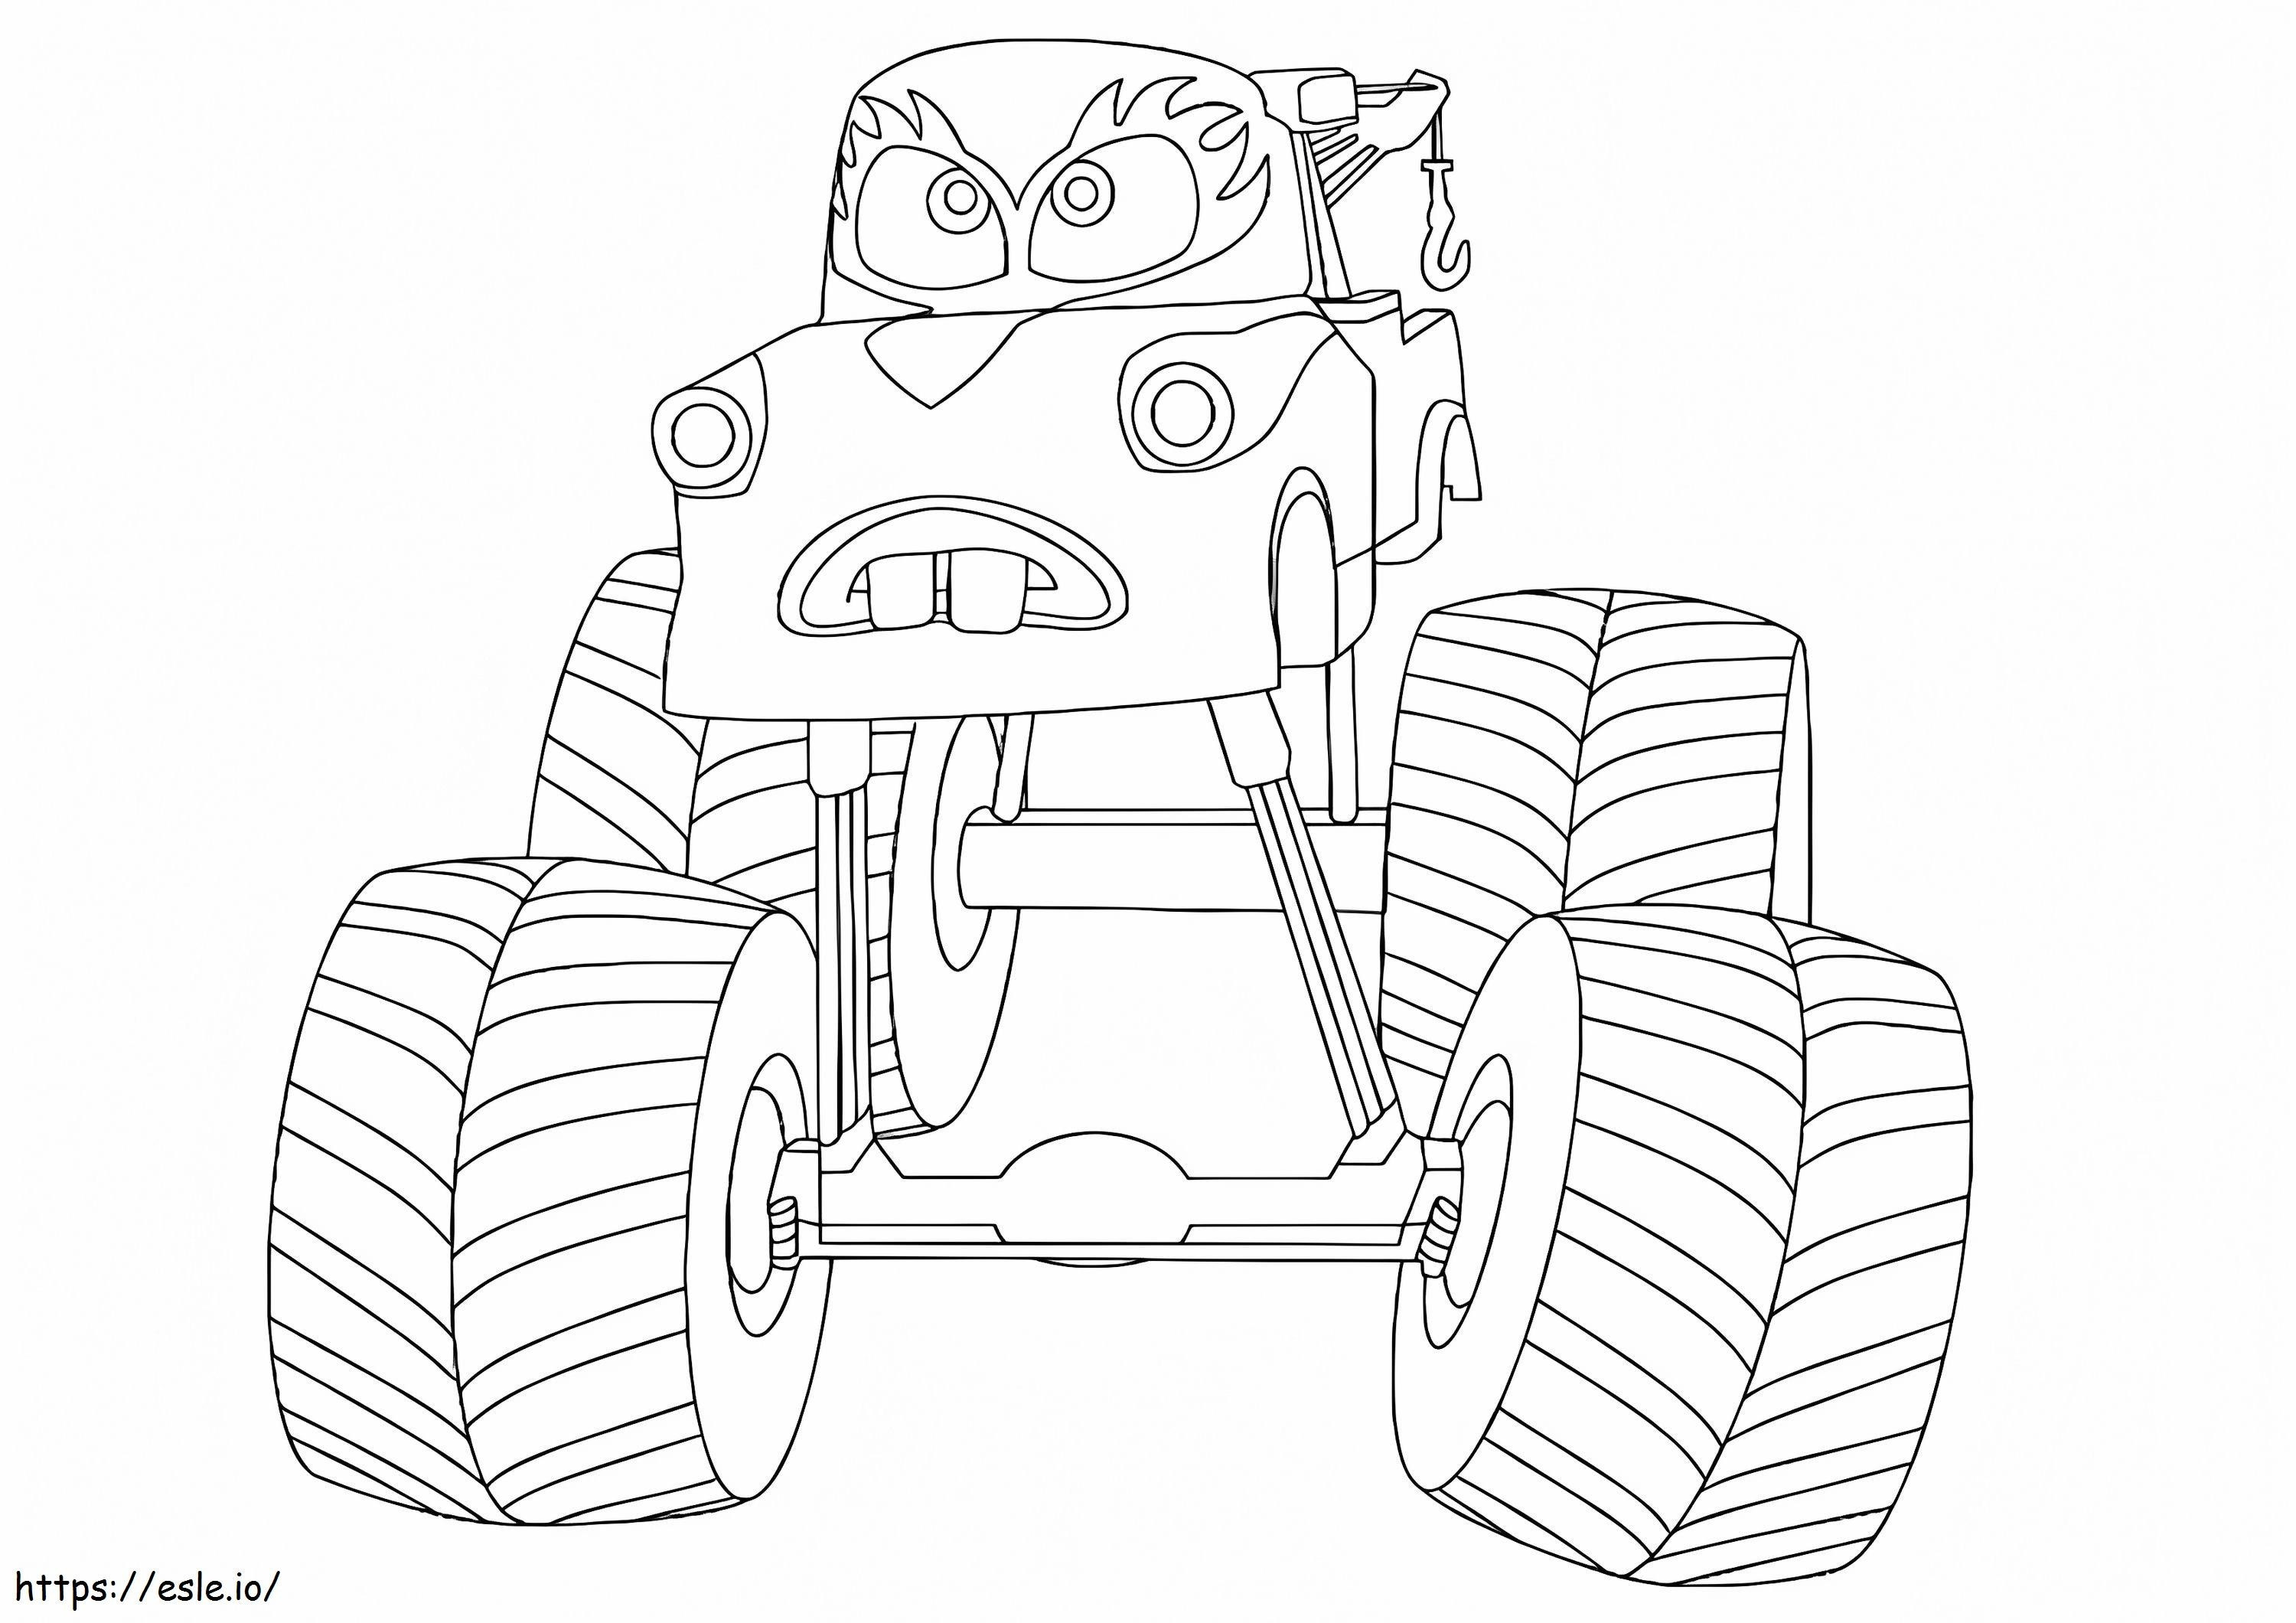  Mater Monster Truck A4 E1621068219691 ausmalbilder